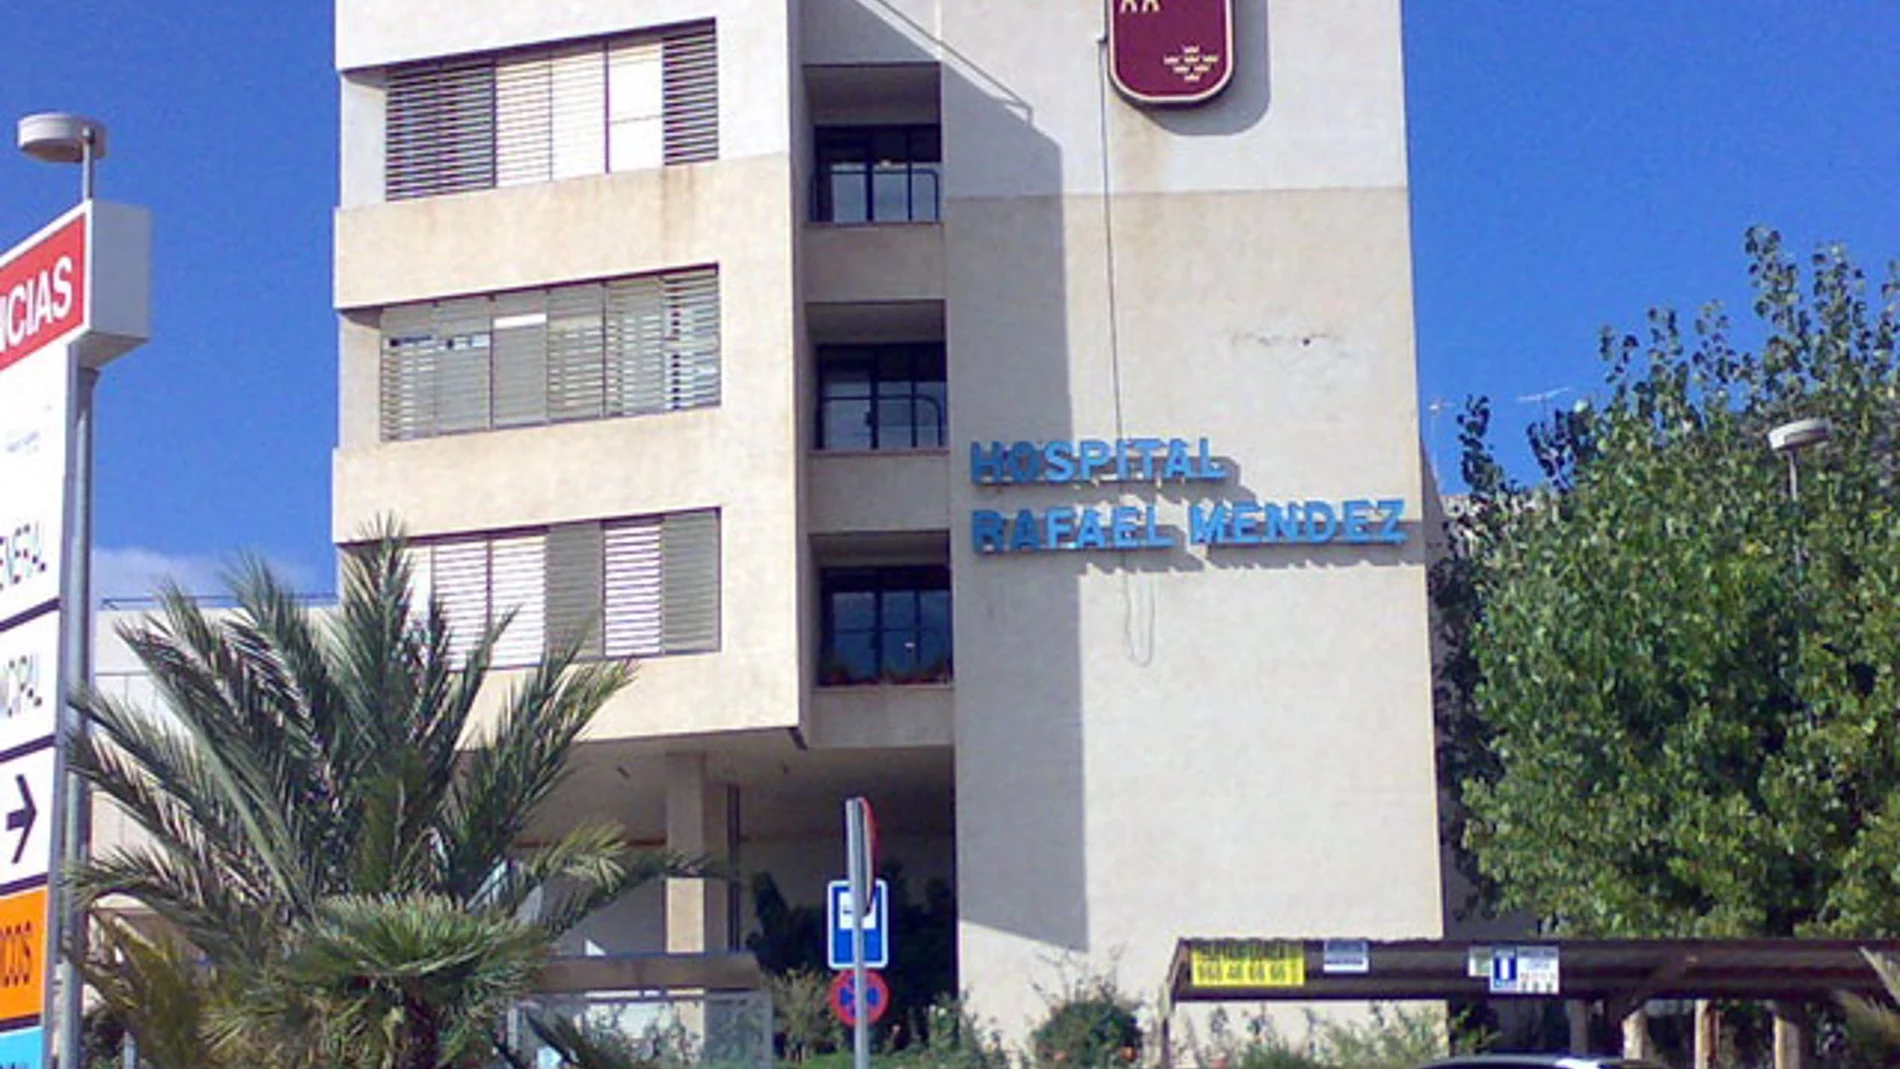 Hospital Rafael Méndez de Lorca (Murcia)